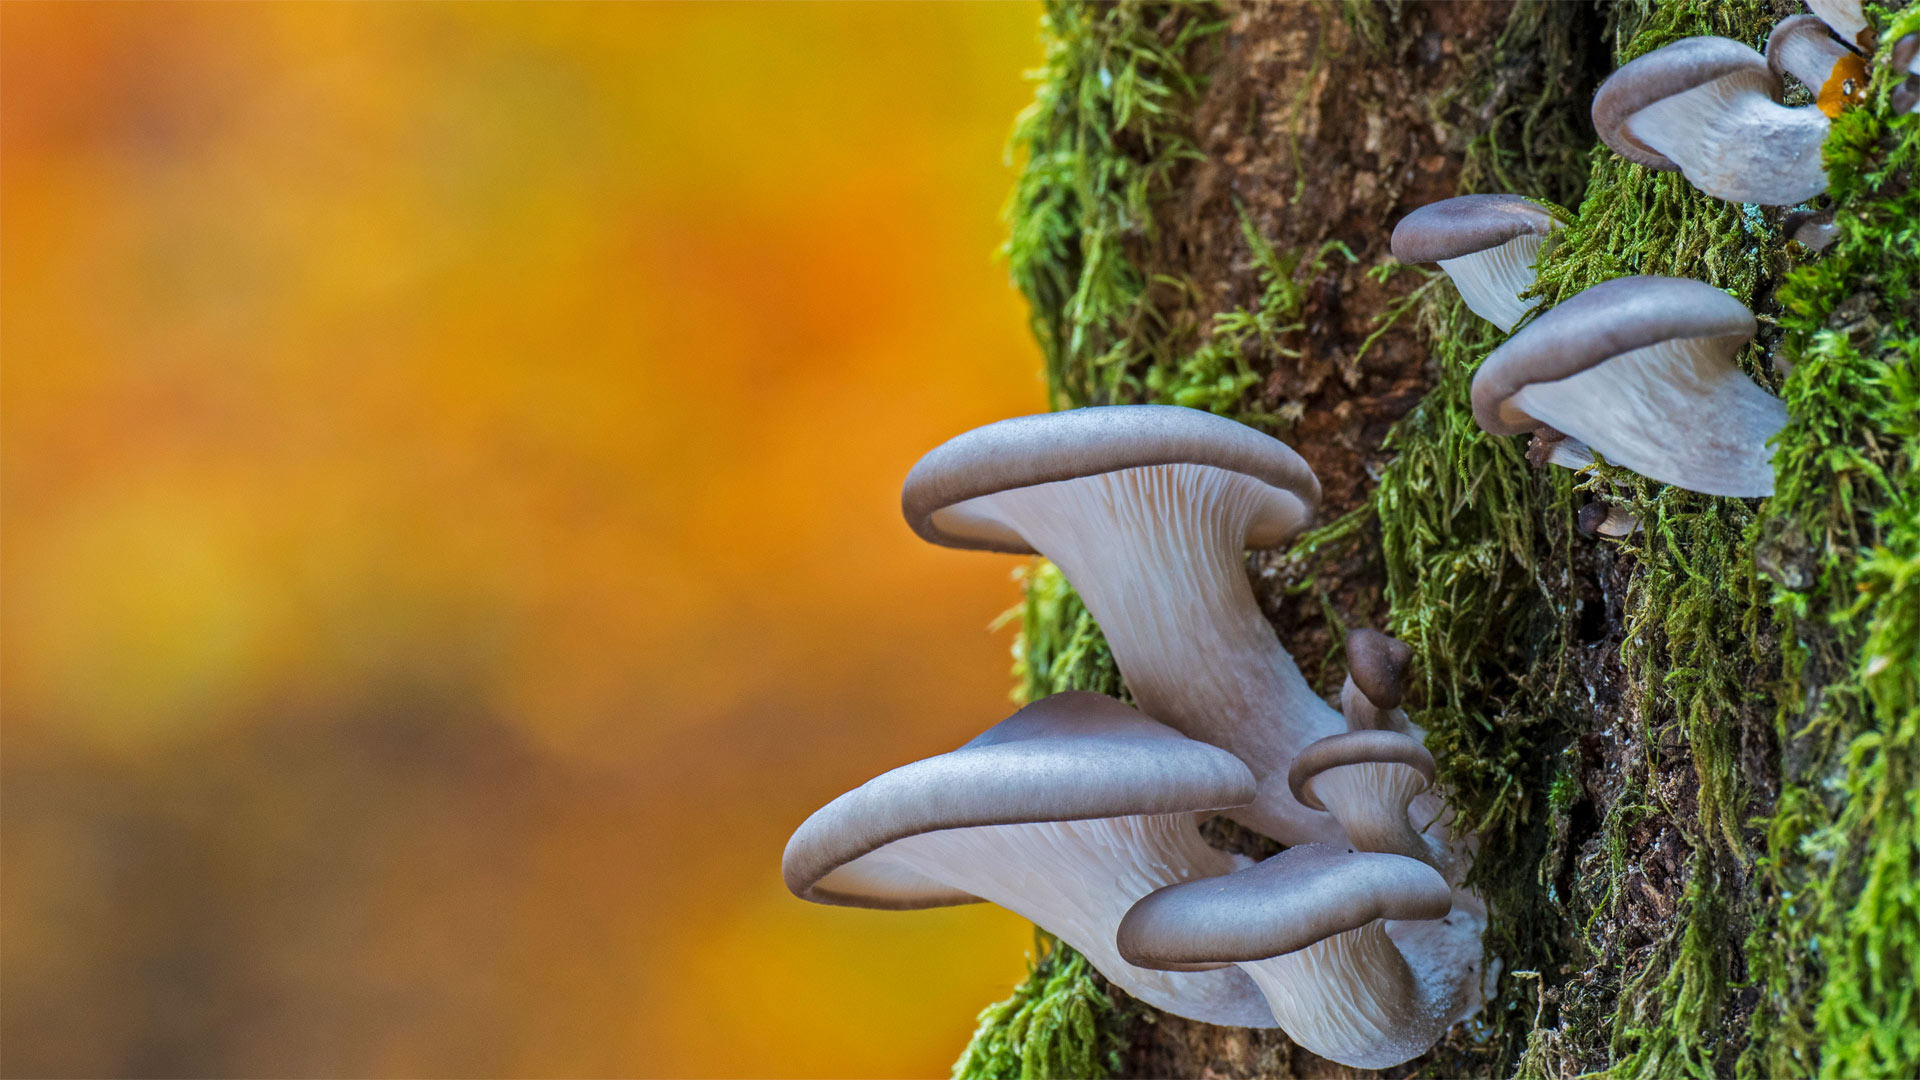 Oyster mushrooms in Belgium, Nature photography, Belgium's flora, Fungal abundance, 1920x1080 Full HD Desktop